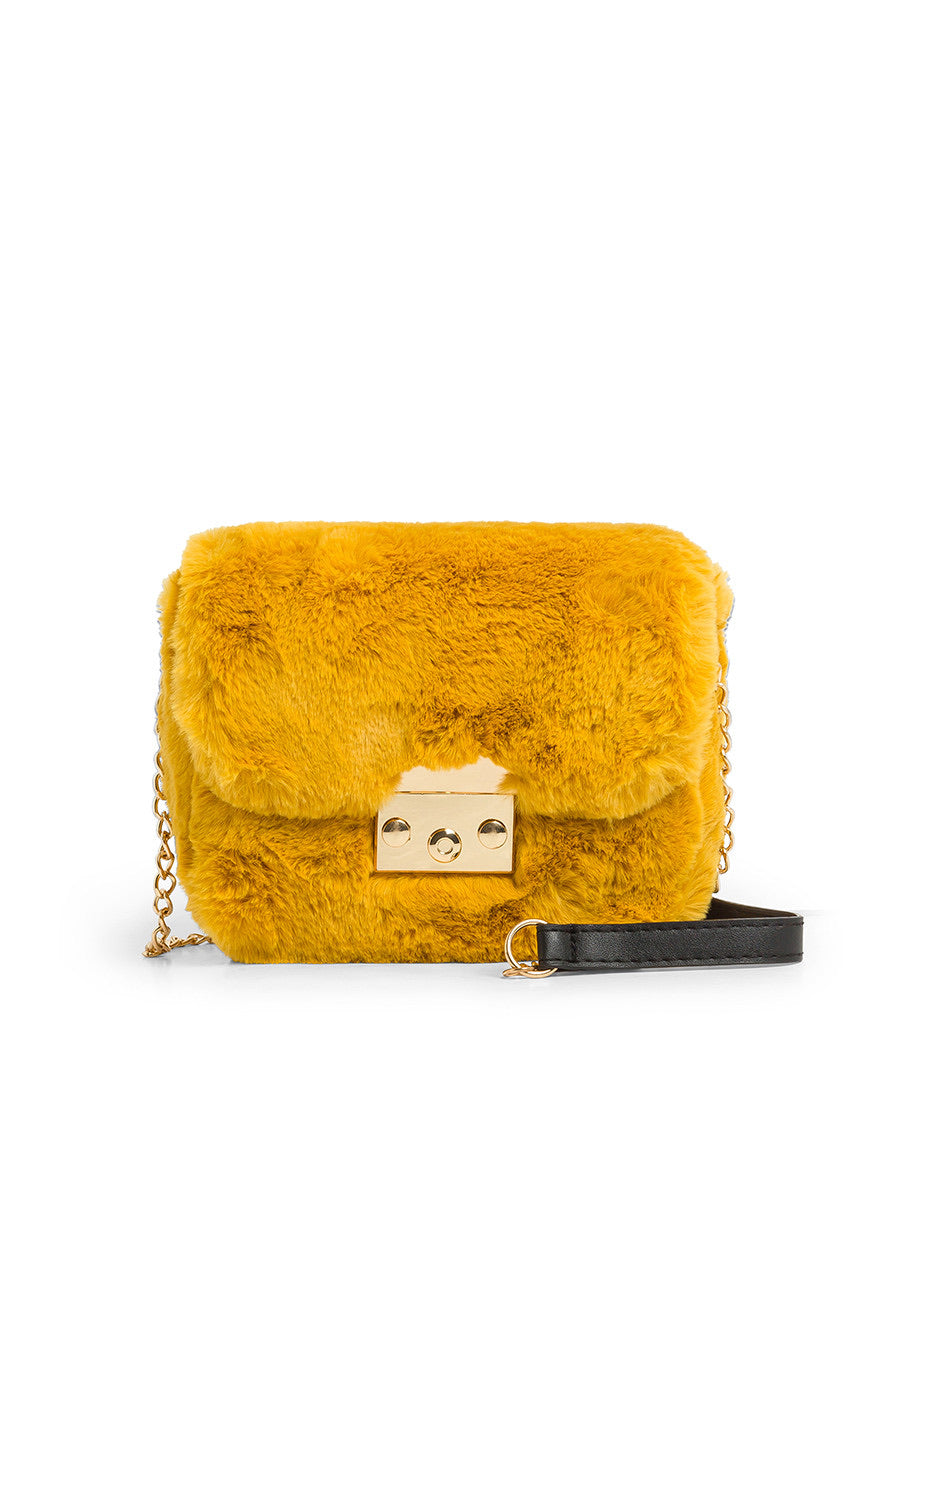 Small handbag yellow - SEA TRENDY